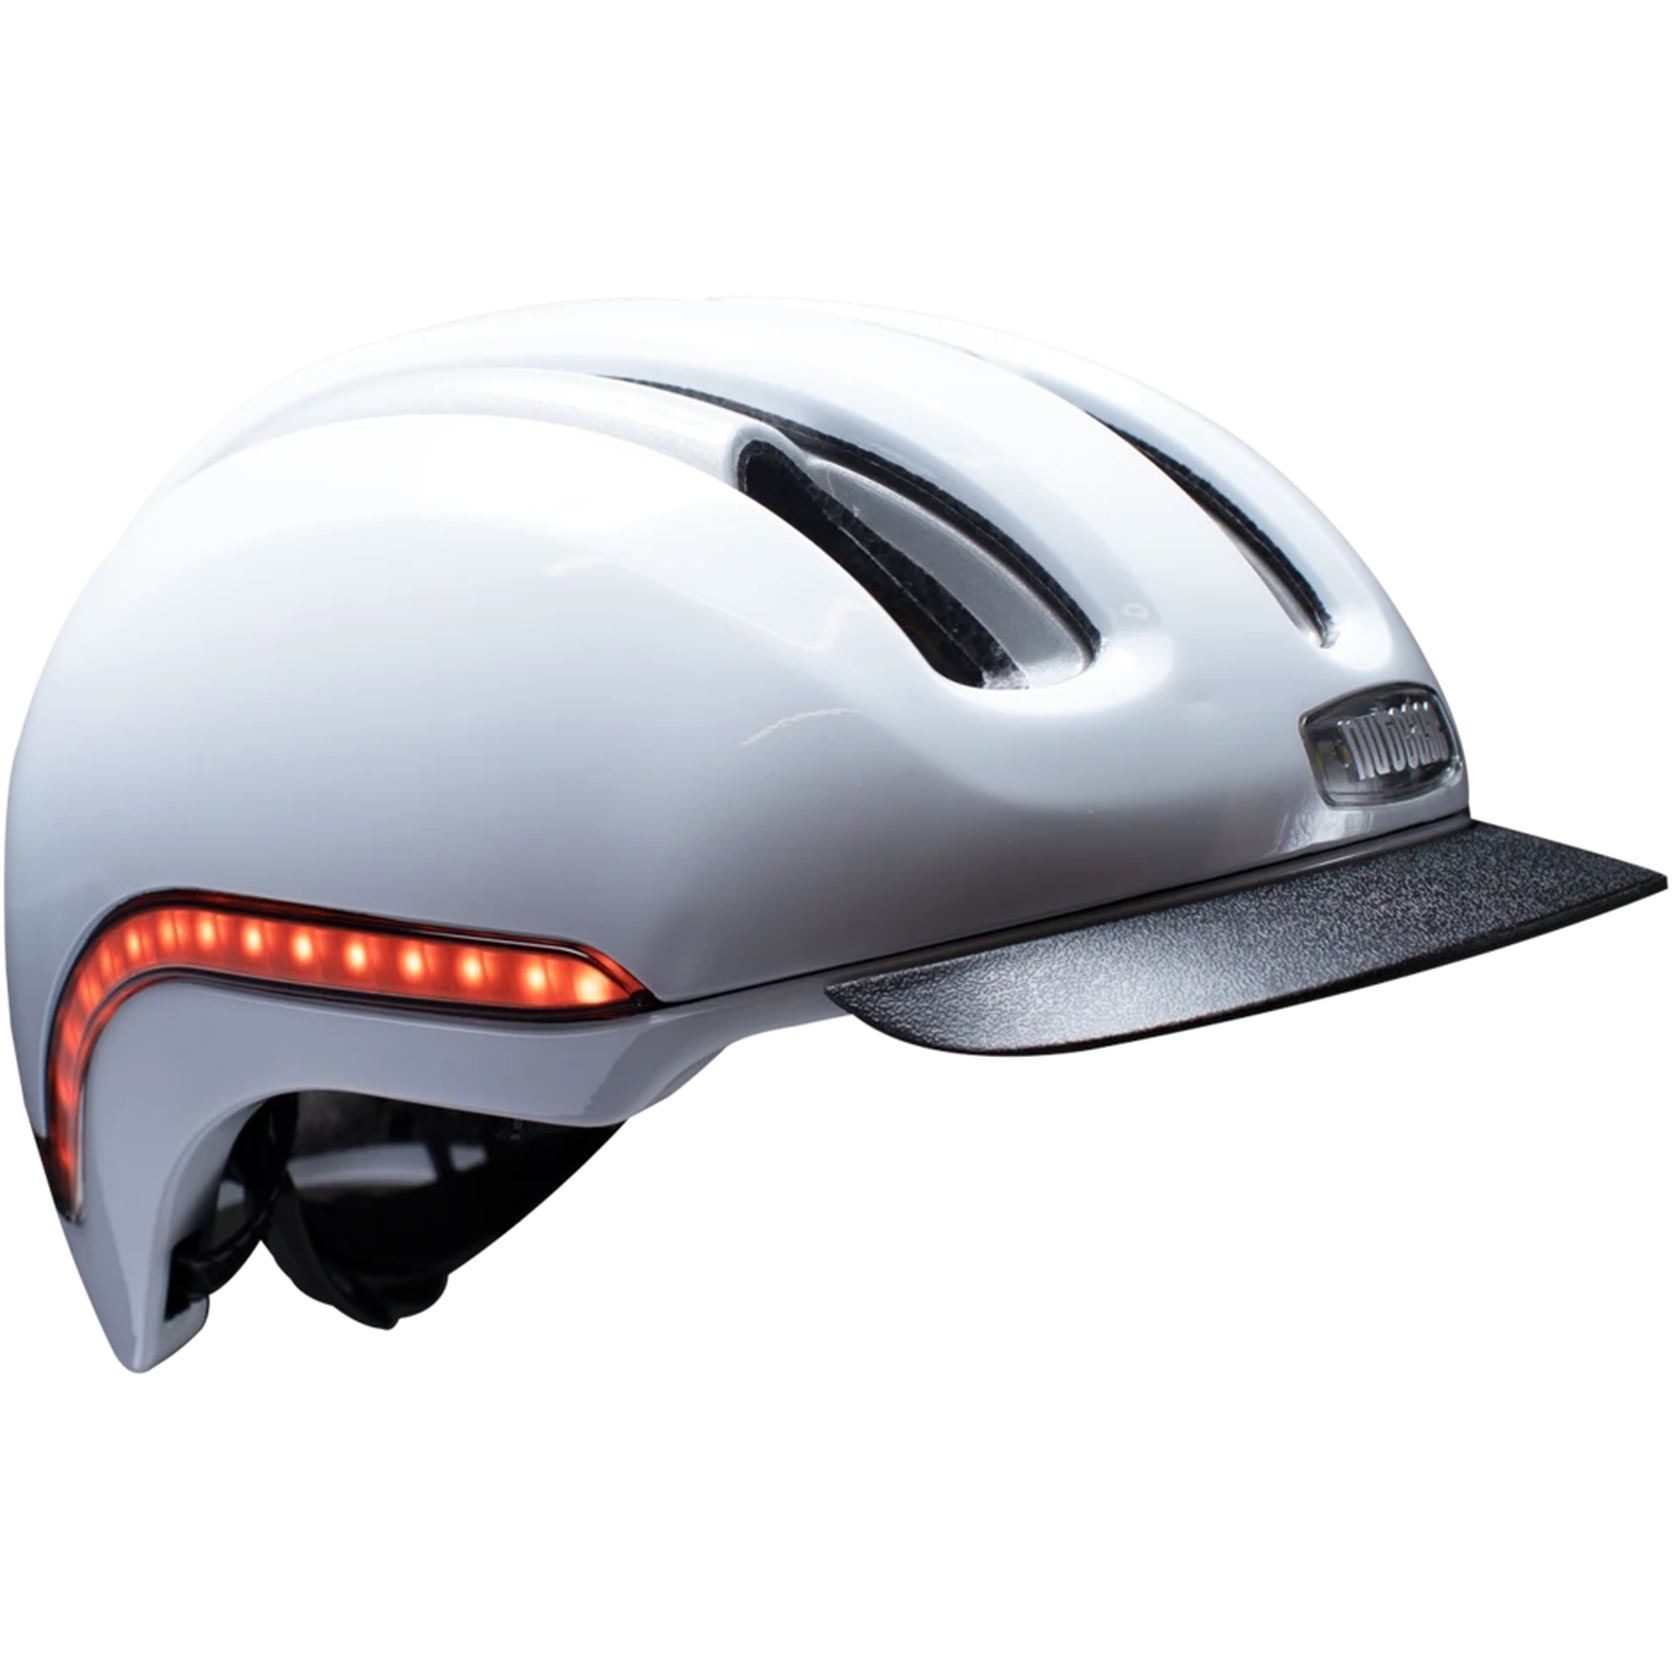 Bild von Nutcase Vio Commute MIPS LED Helm - Blanco Gloss